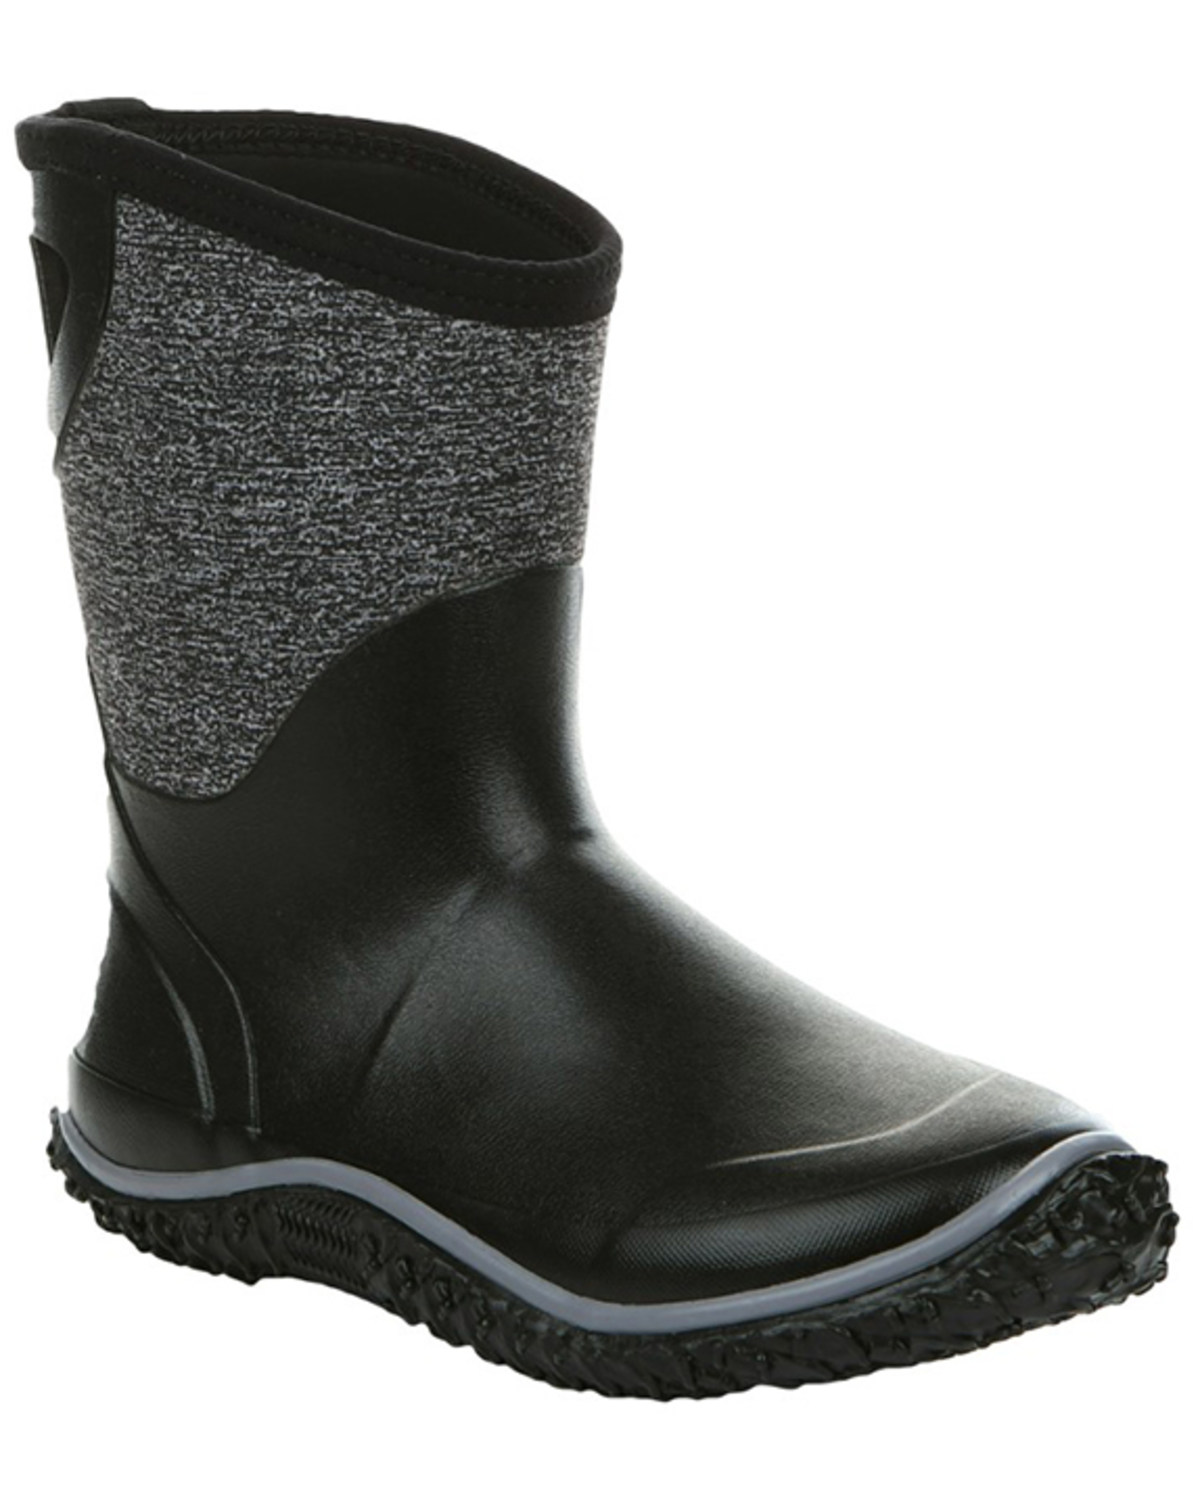 Northside Women's Alice Waterproof Insulated Neoprene All-Weather Hiking Work Boots